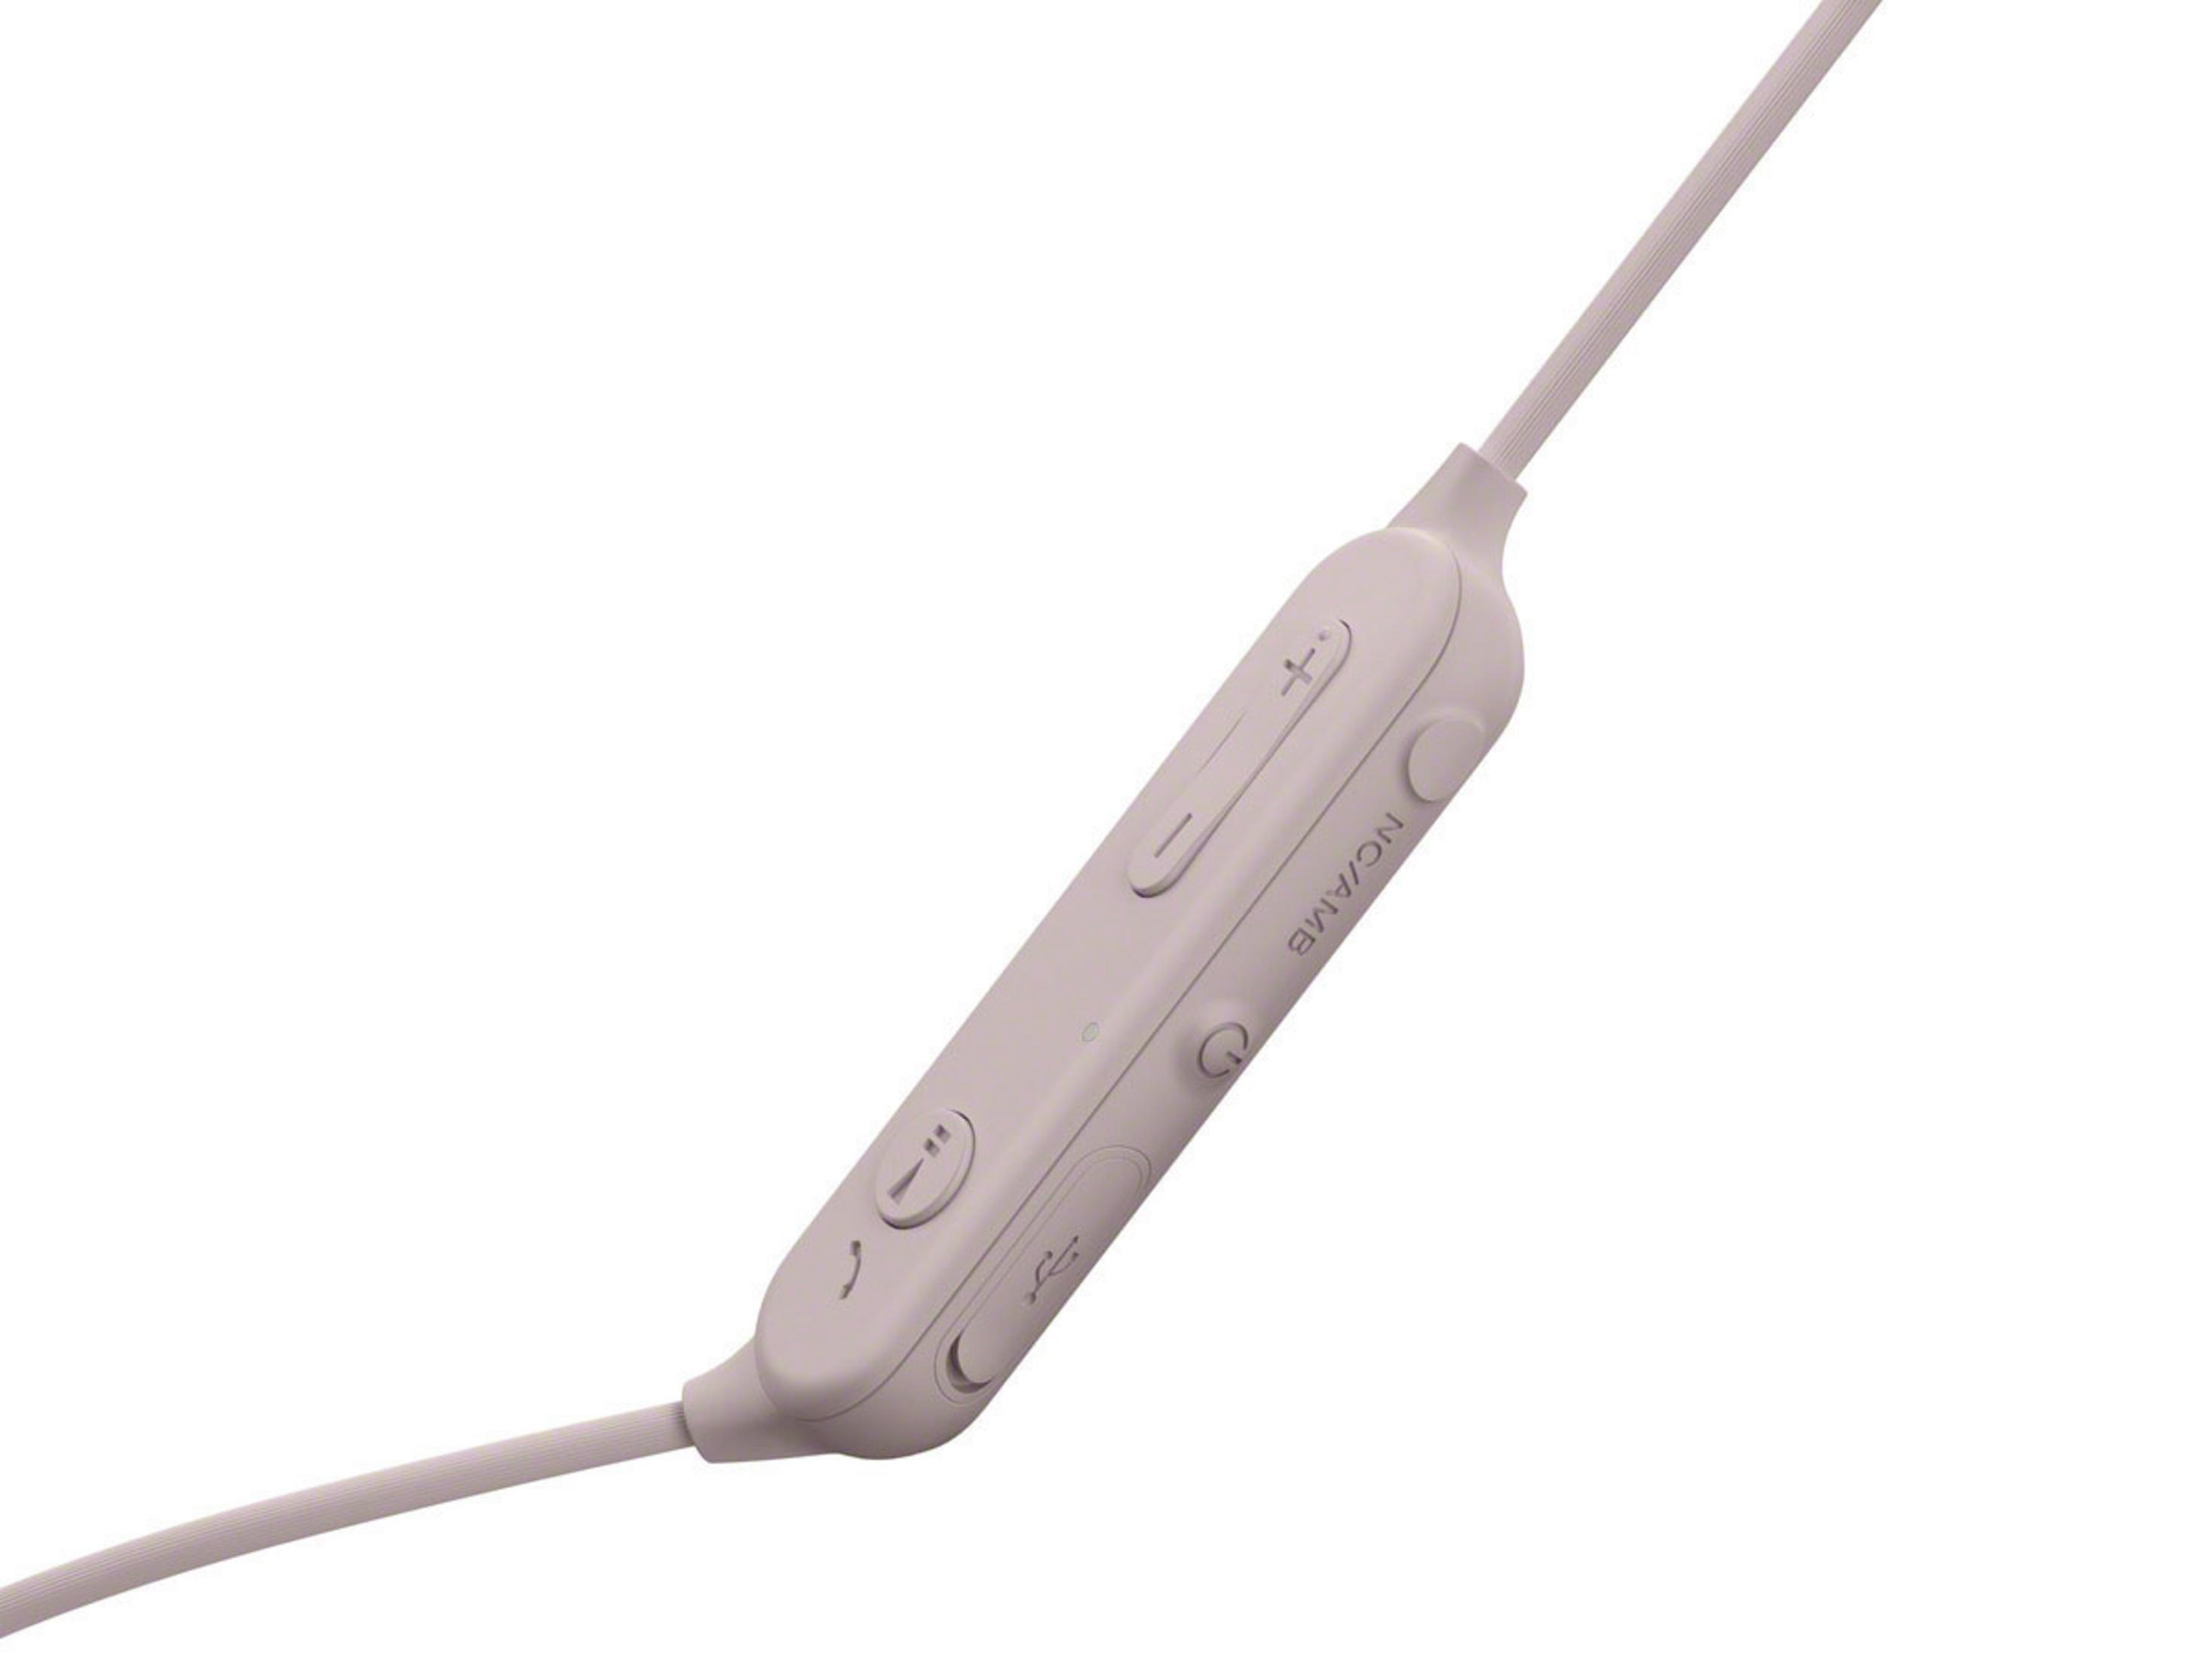 SONY WI-SP 600N P In-ear Rosa Bluetooth PINK, Kopfhörer